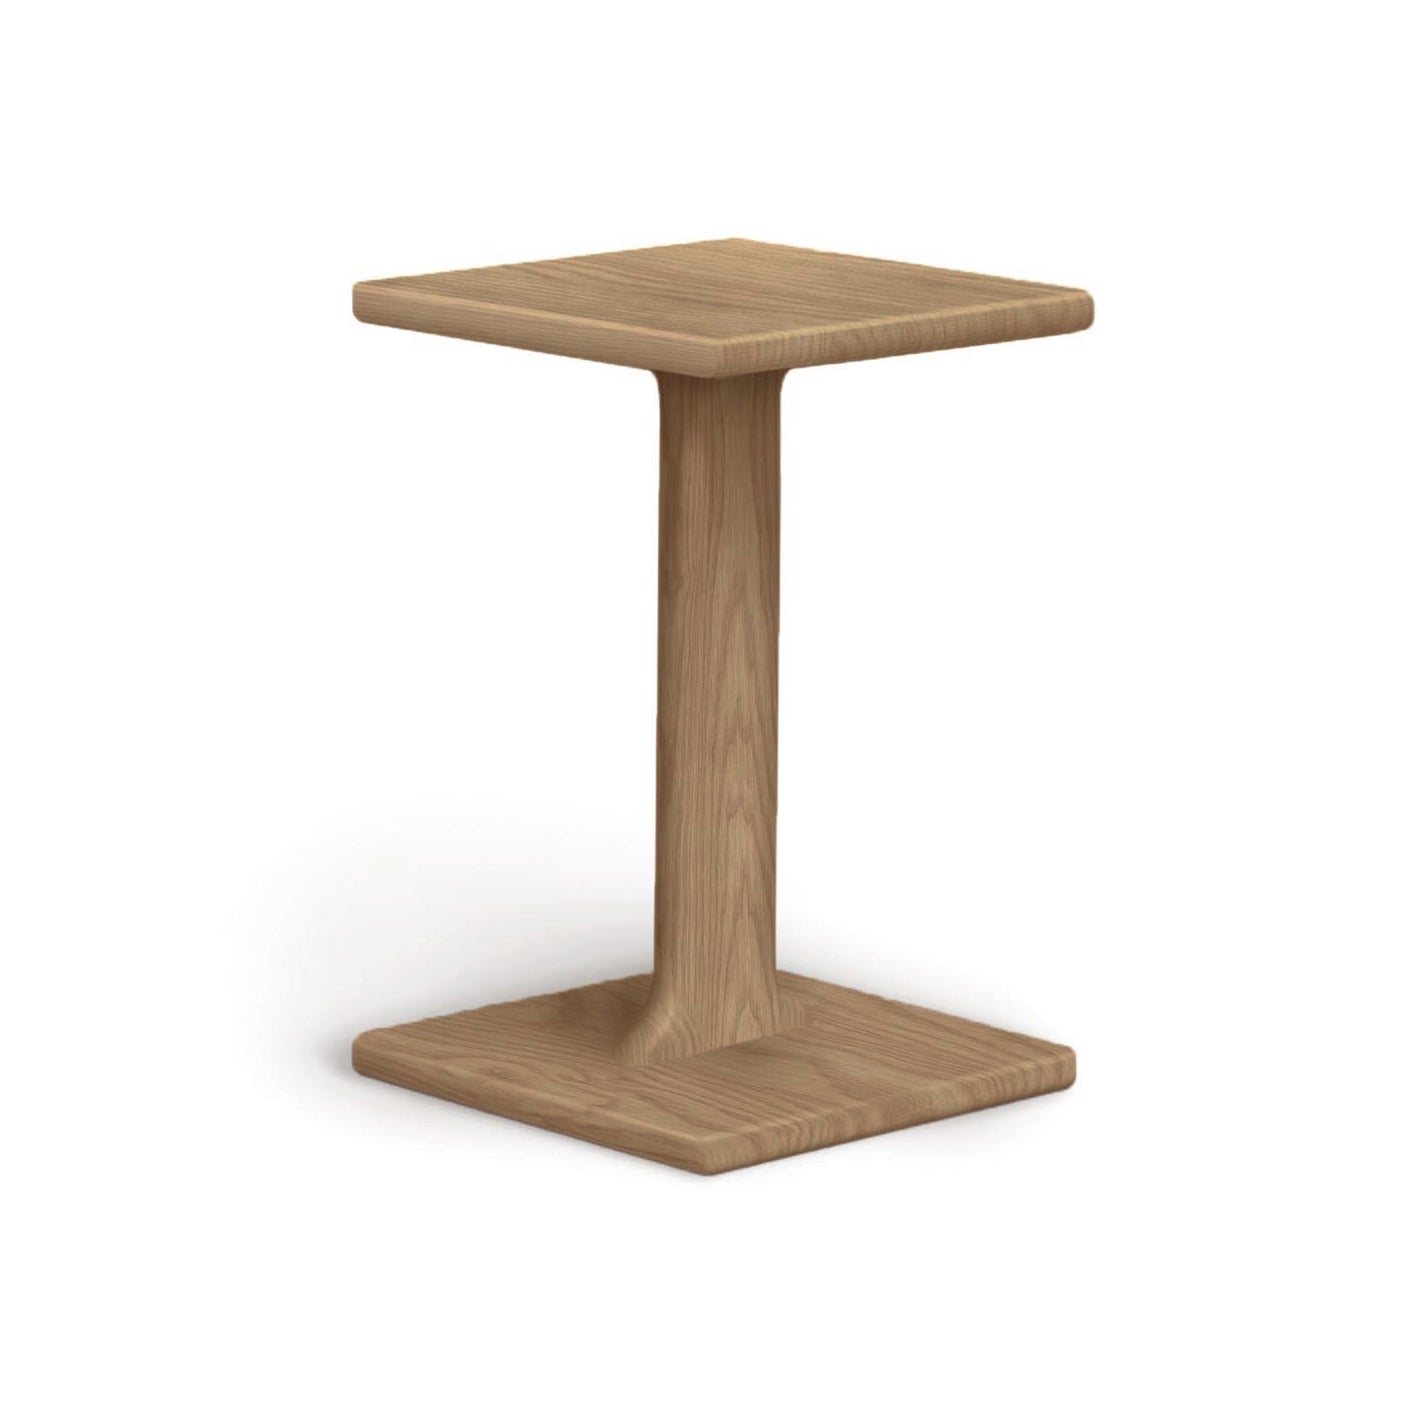 A Copeland Furniture Sierra Chair Table against a white background.